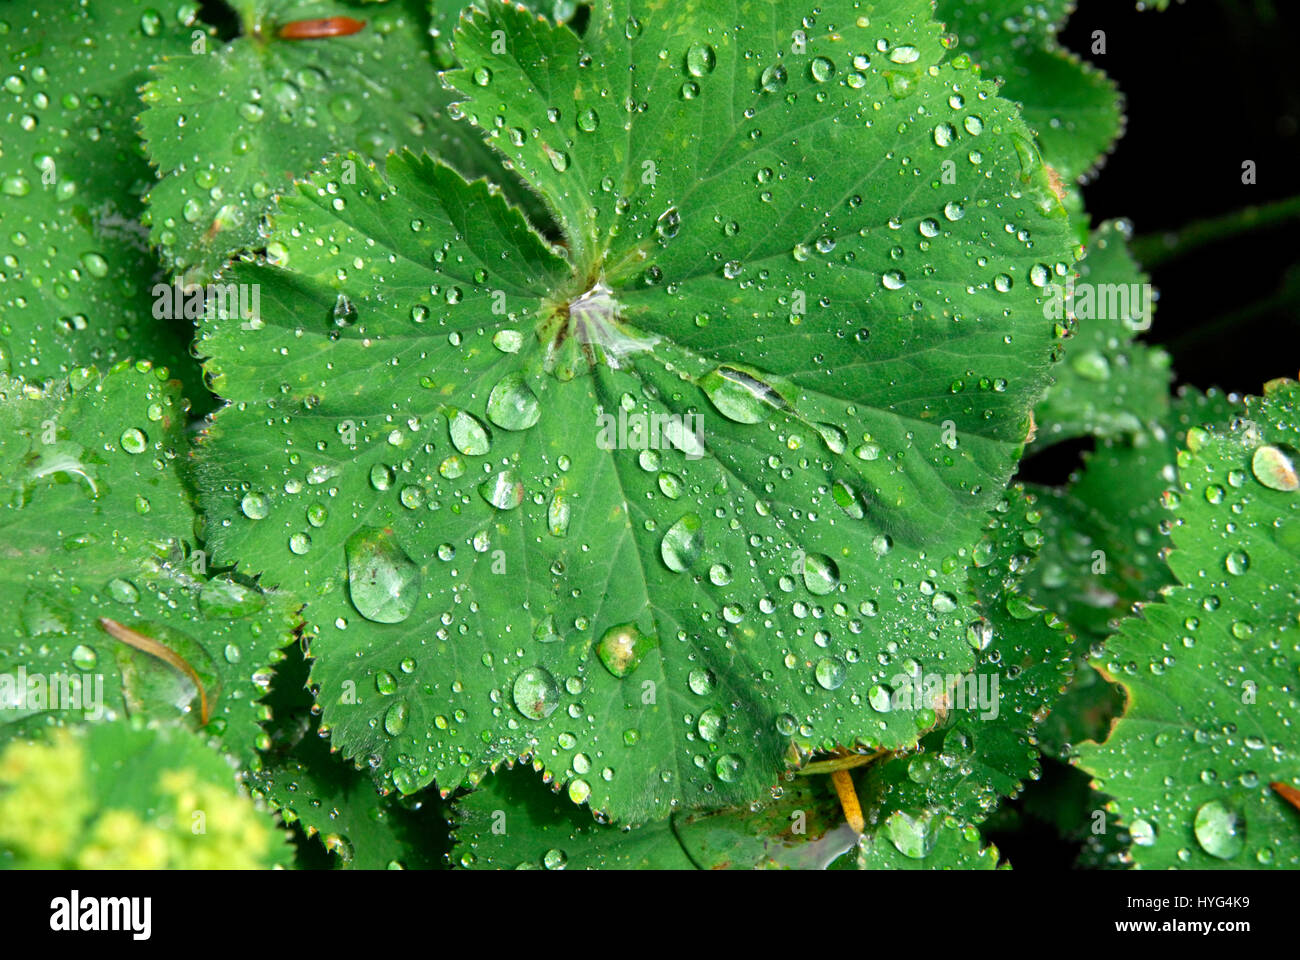 Leaf of Lady's Mantle, Alchemilla mollis, with gathered raindrops Stock Photo